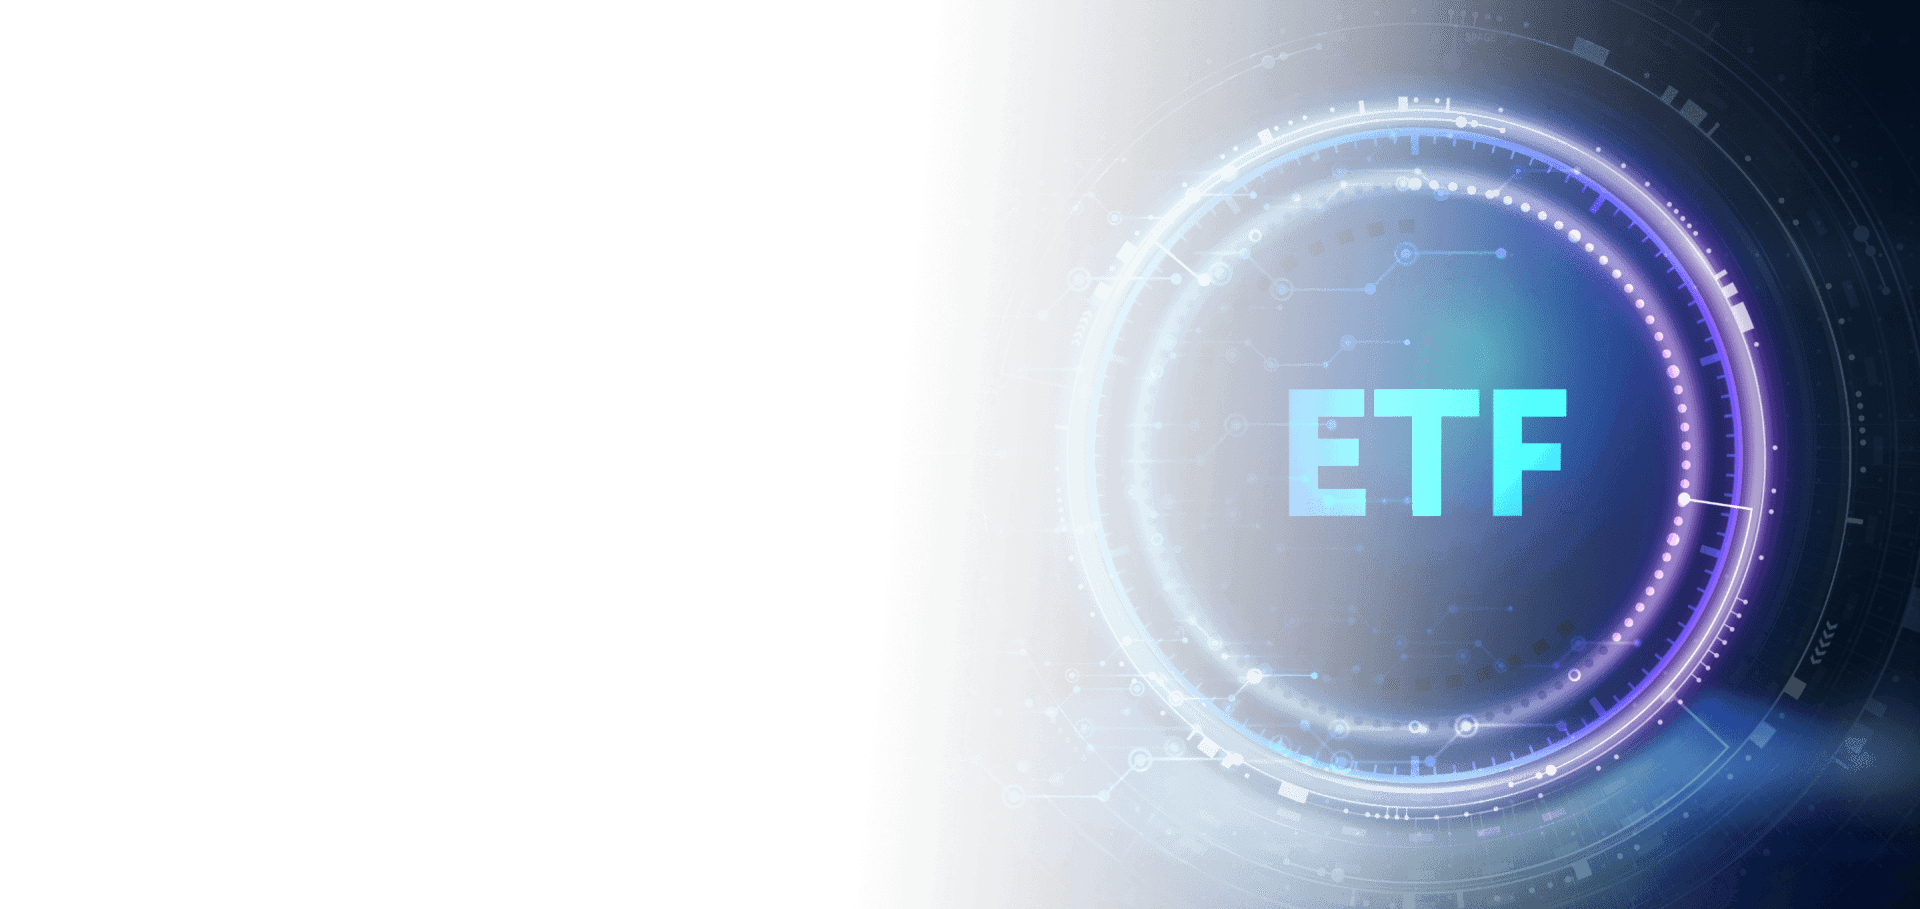 Investire in ETF